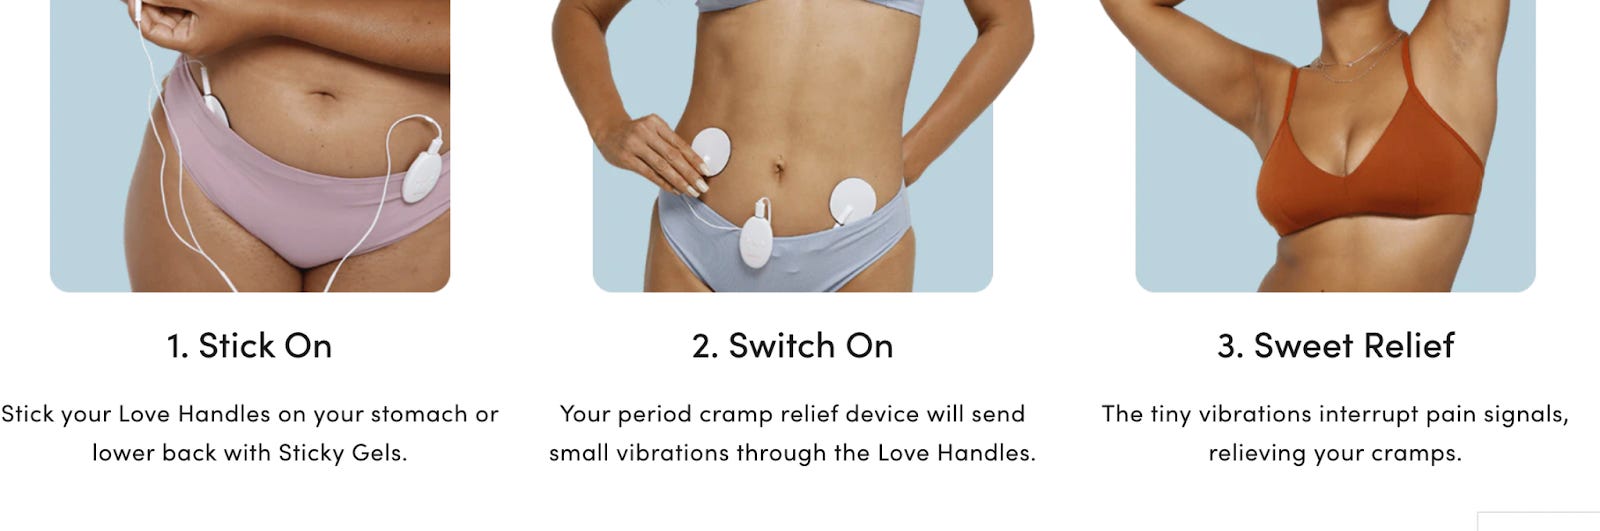 Period Cramp Relief Device